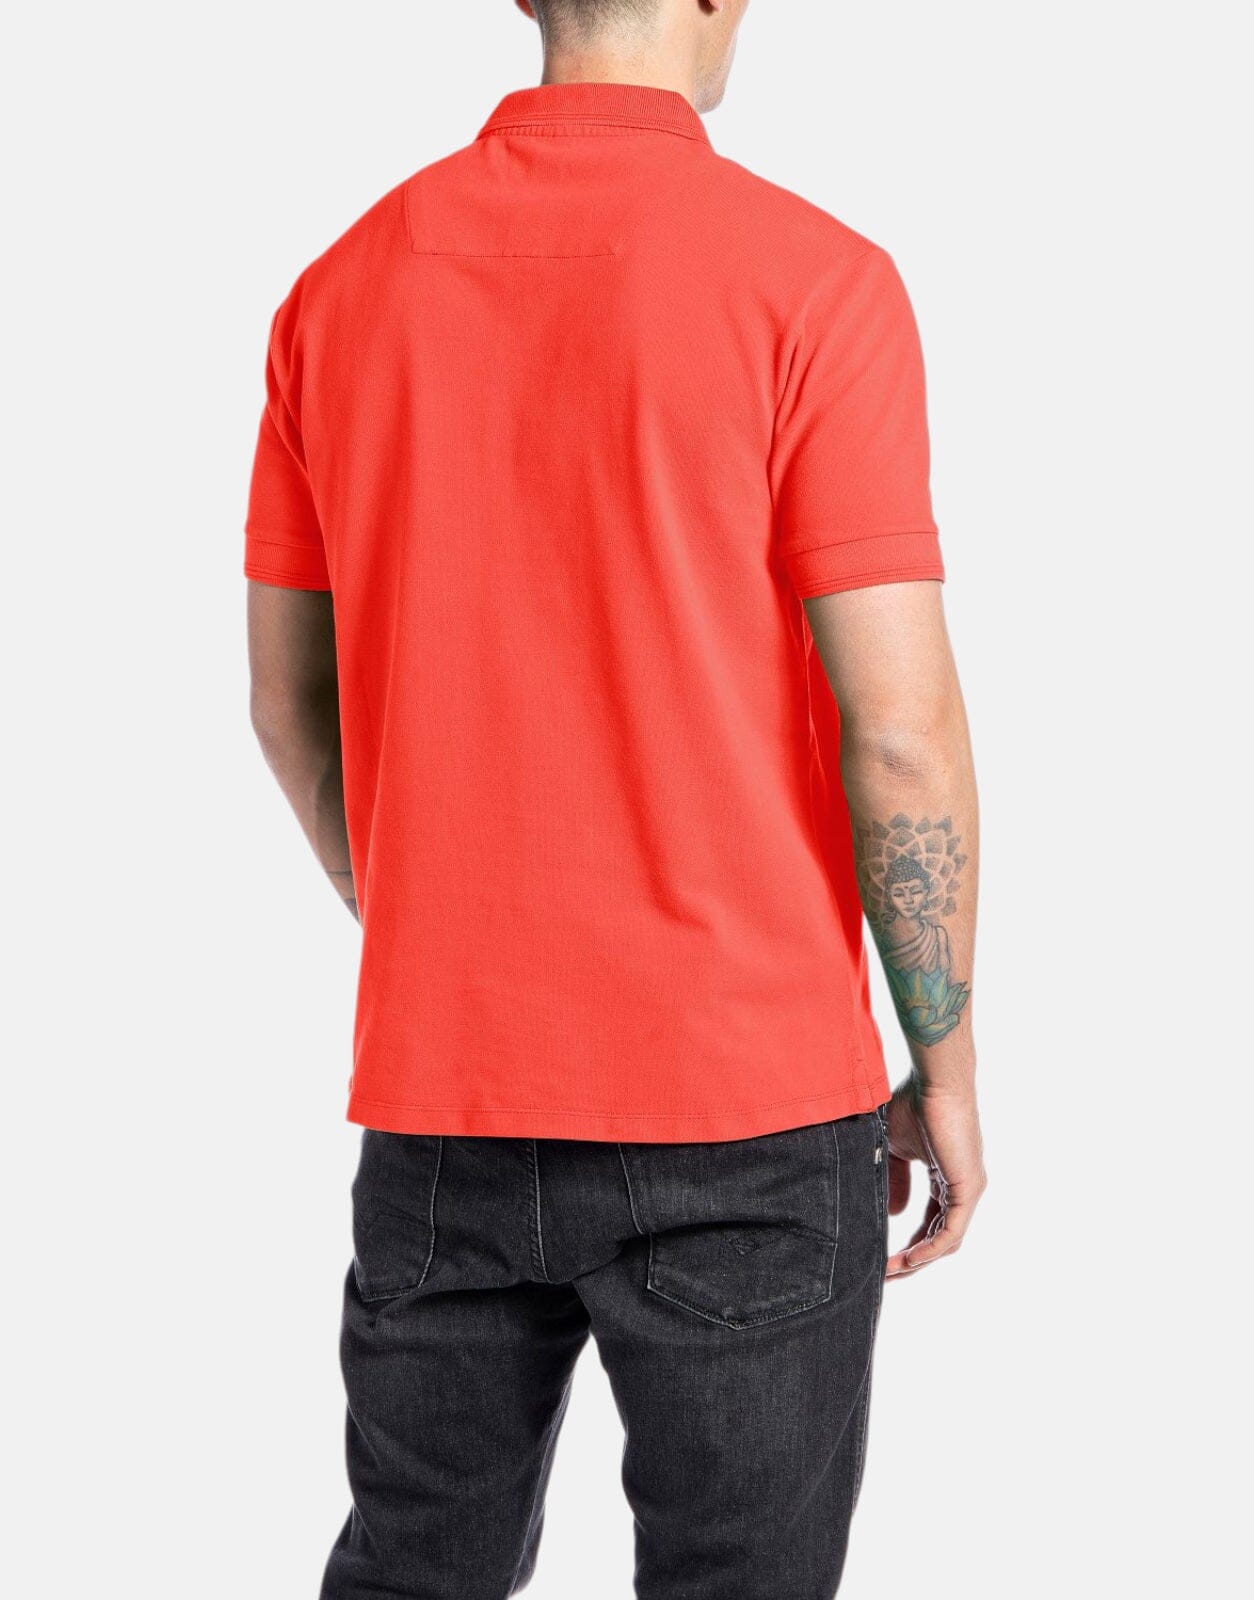 Replay Triangle Logo Red Polo Shirt - Subwear